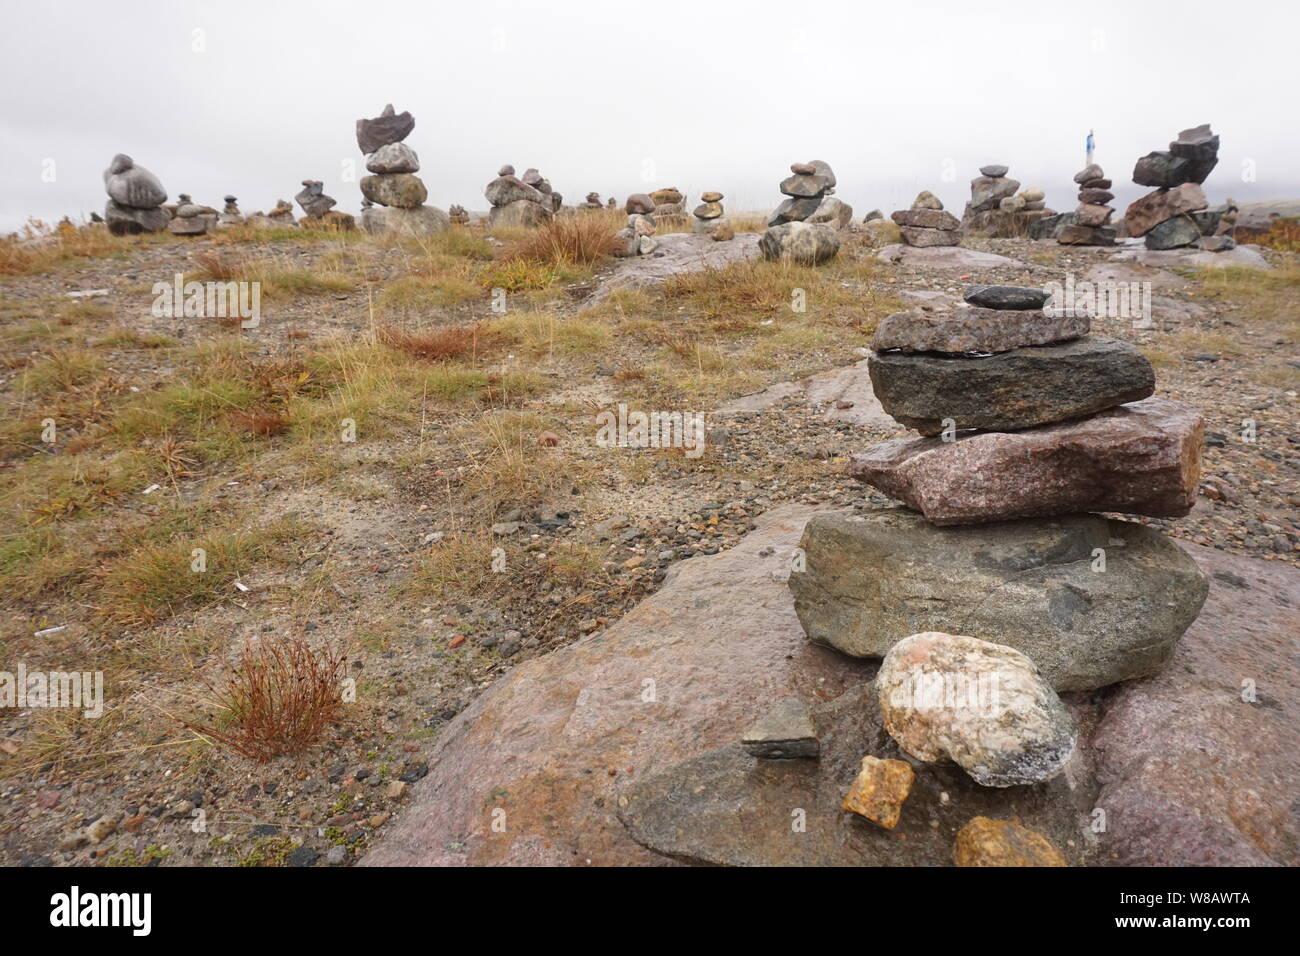 Stones are stakced on a tundra field in Teriberka, Russia. Stock Photo